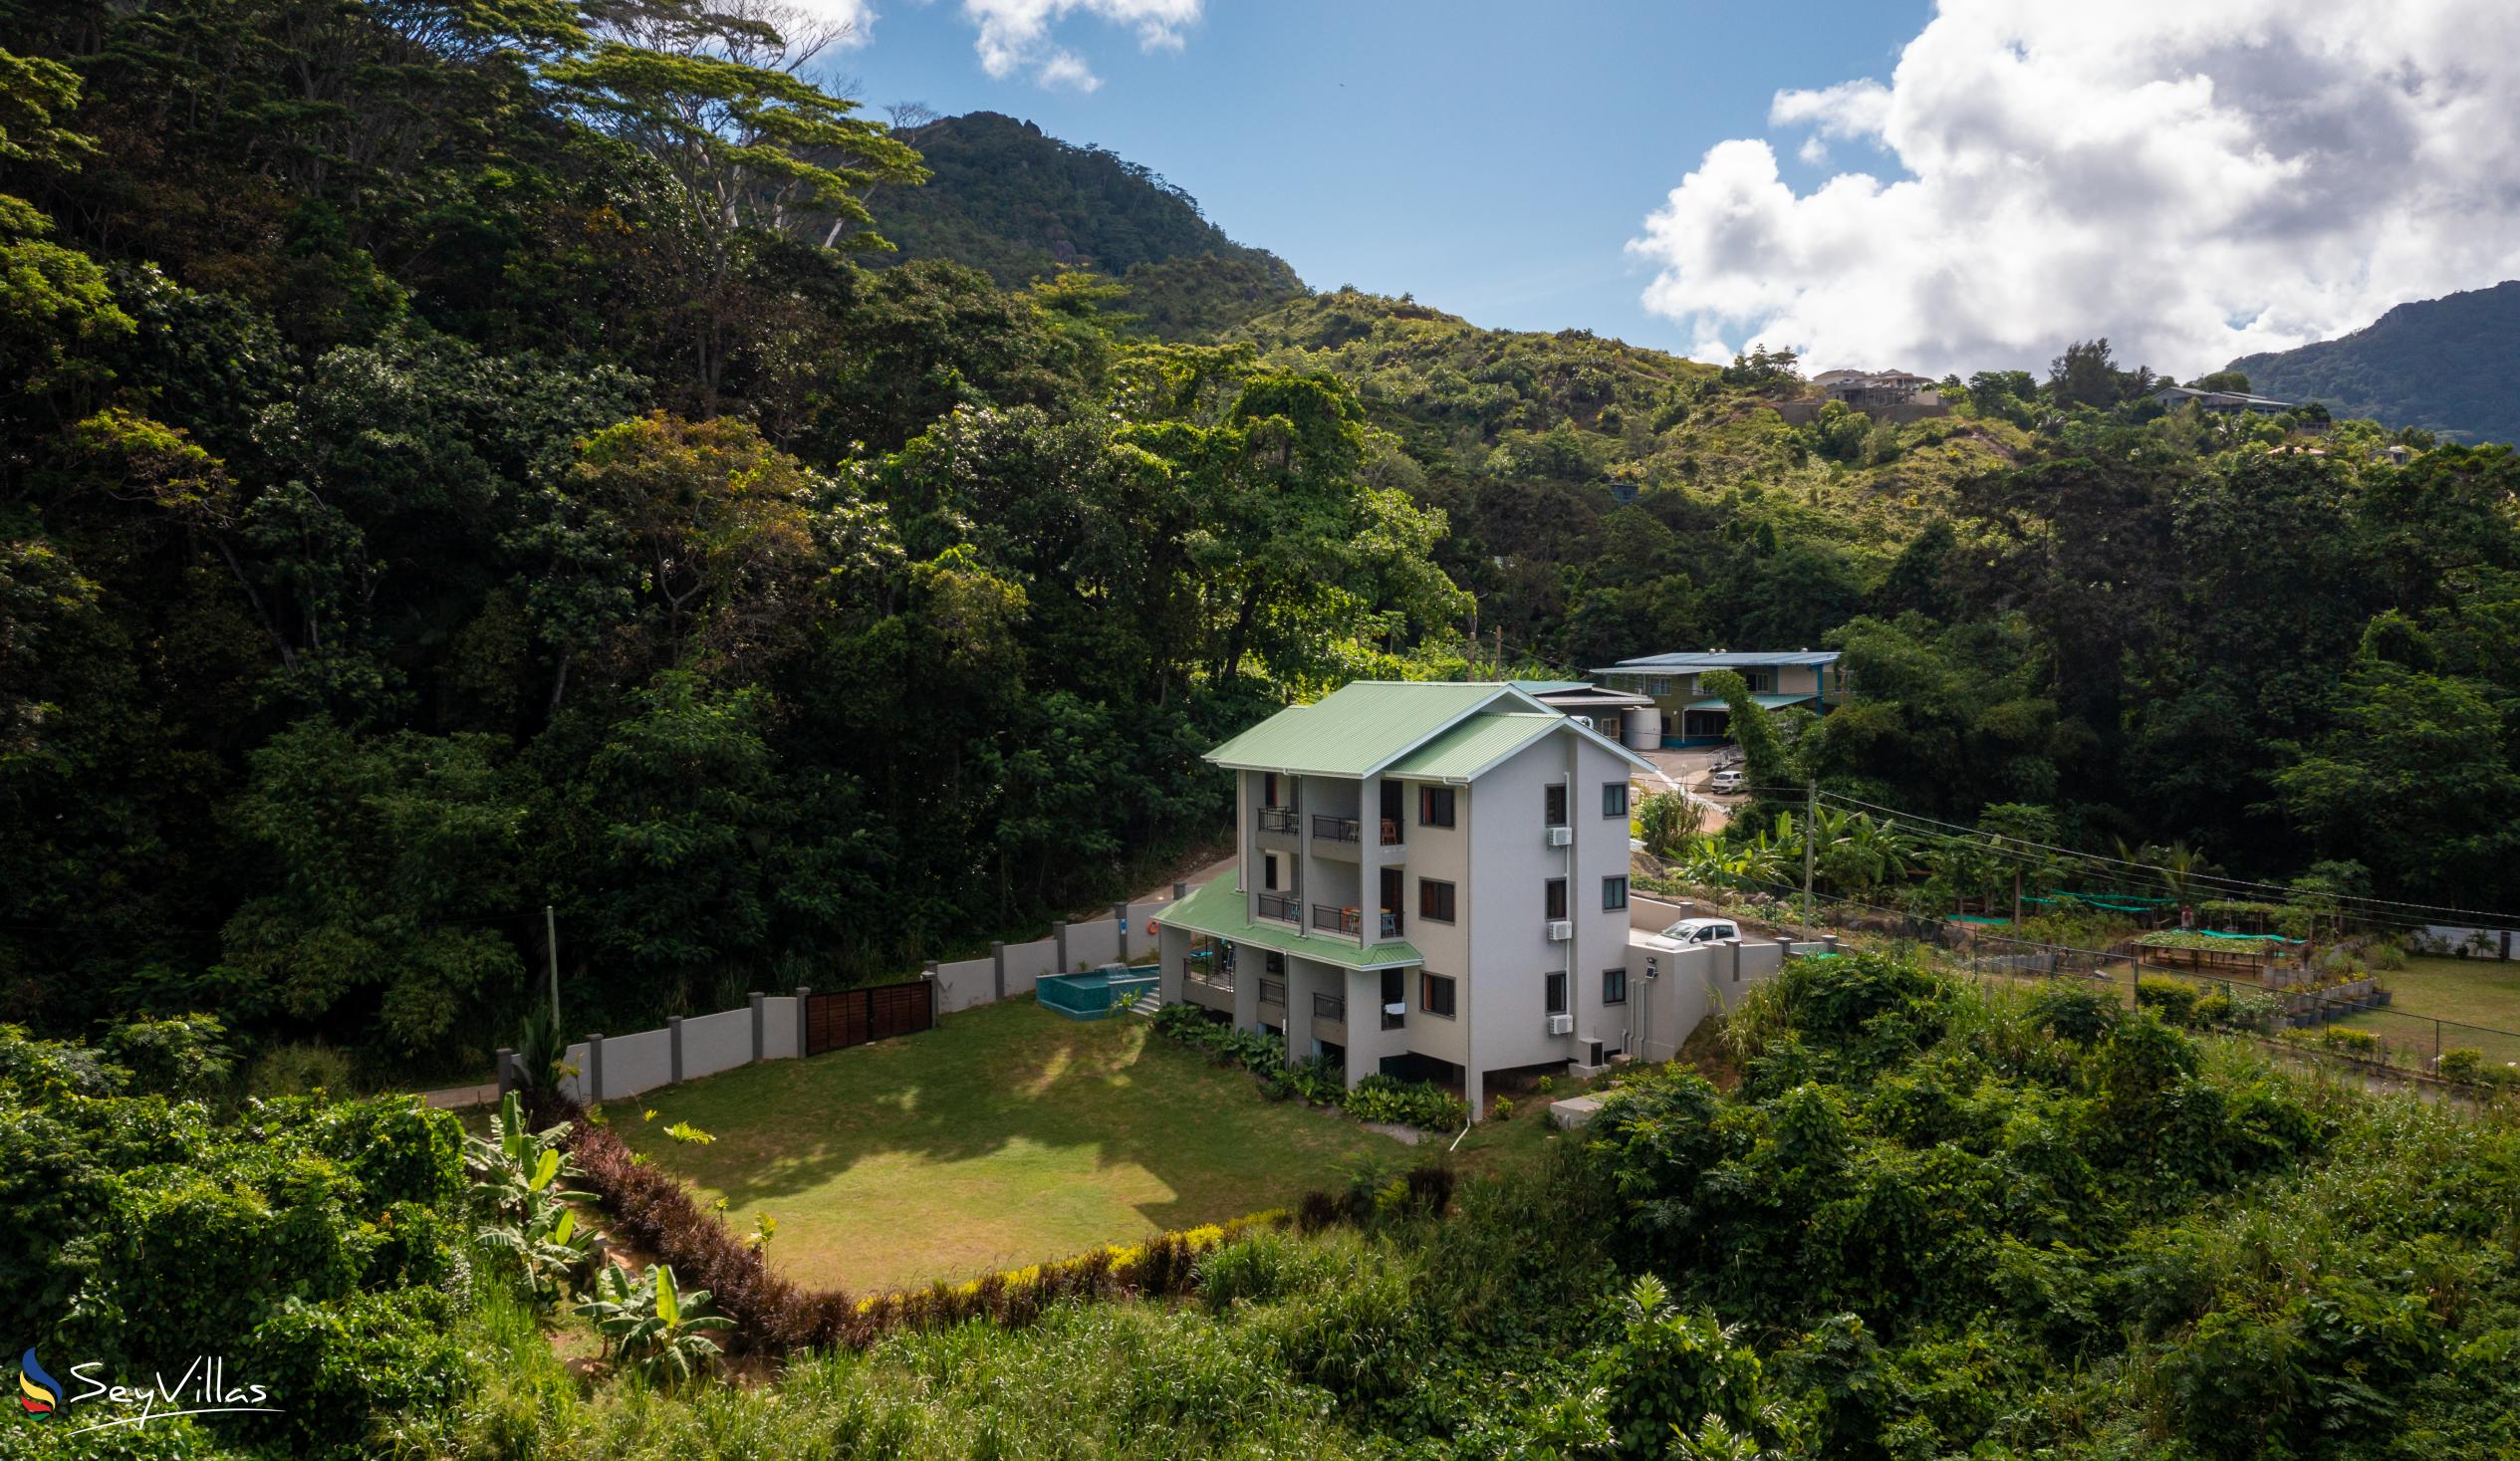 Photo 3: Hidden Valley Residence - Outdoor area - Mahé (Seychelles)